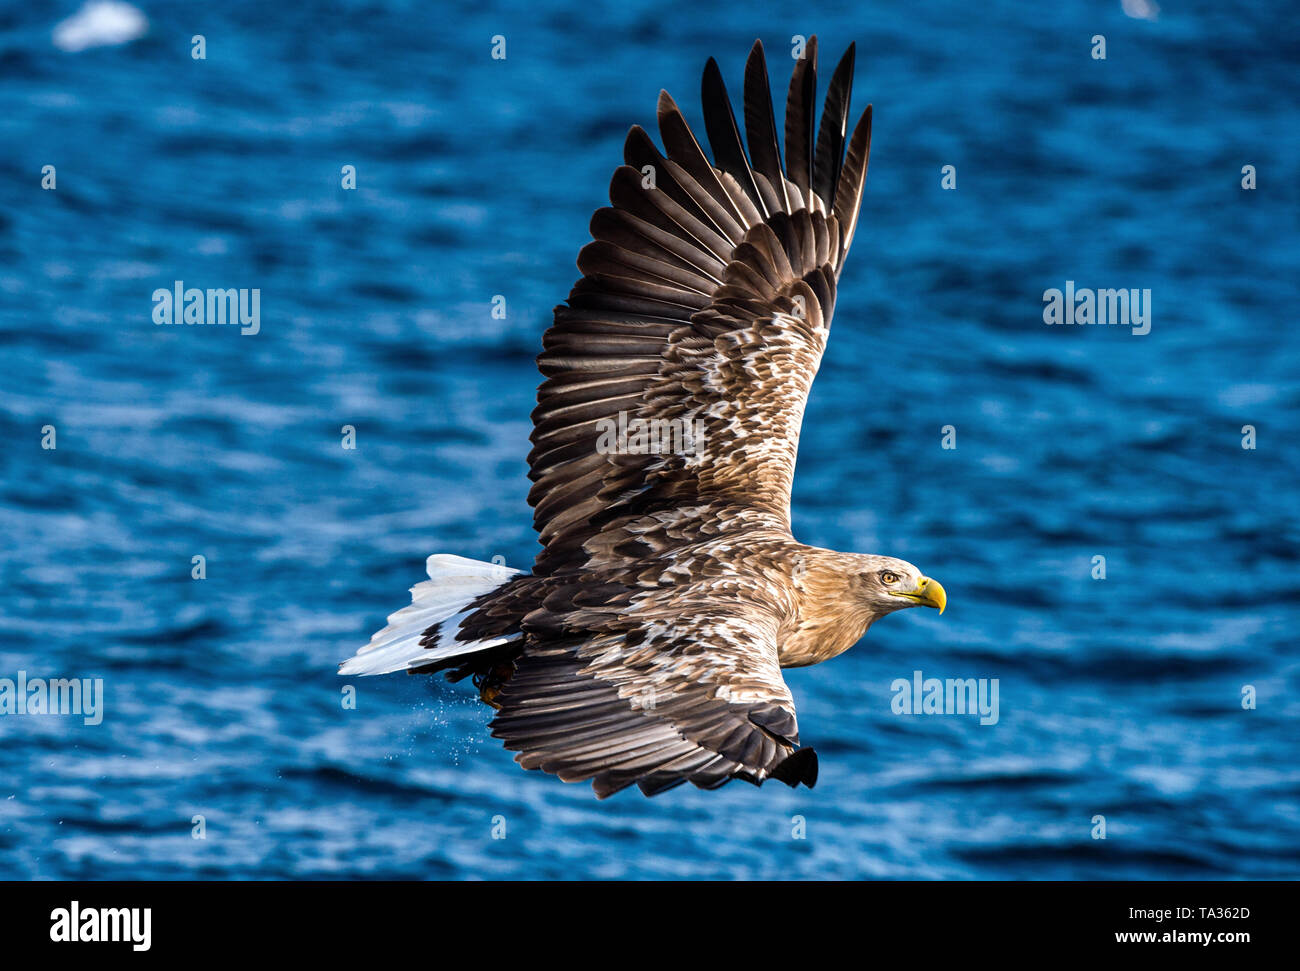 White-tailed eagle in flight. Blue Ocean Background. Scientific name: Haliaeetus albicilla, also known as the ern, erne, gray eagle, Eurasian sea eagl Stock Photo